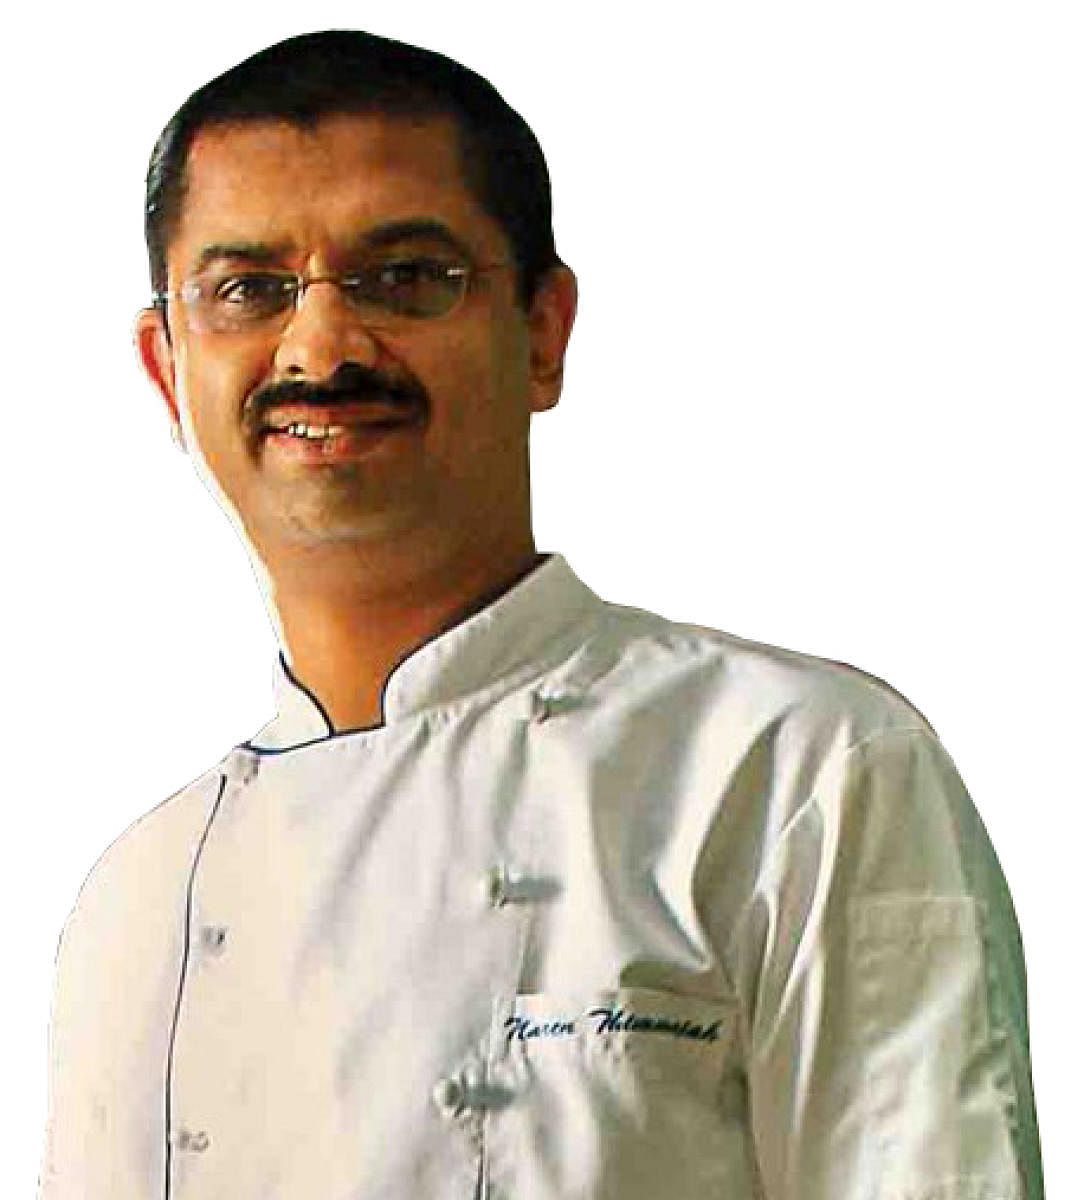 Chef Naren Thimmaiah